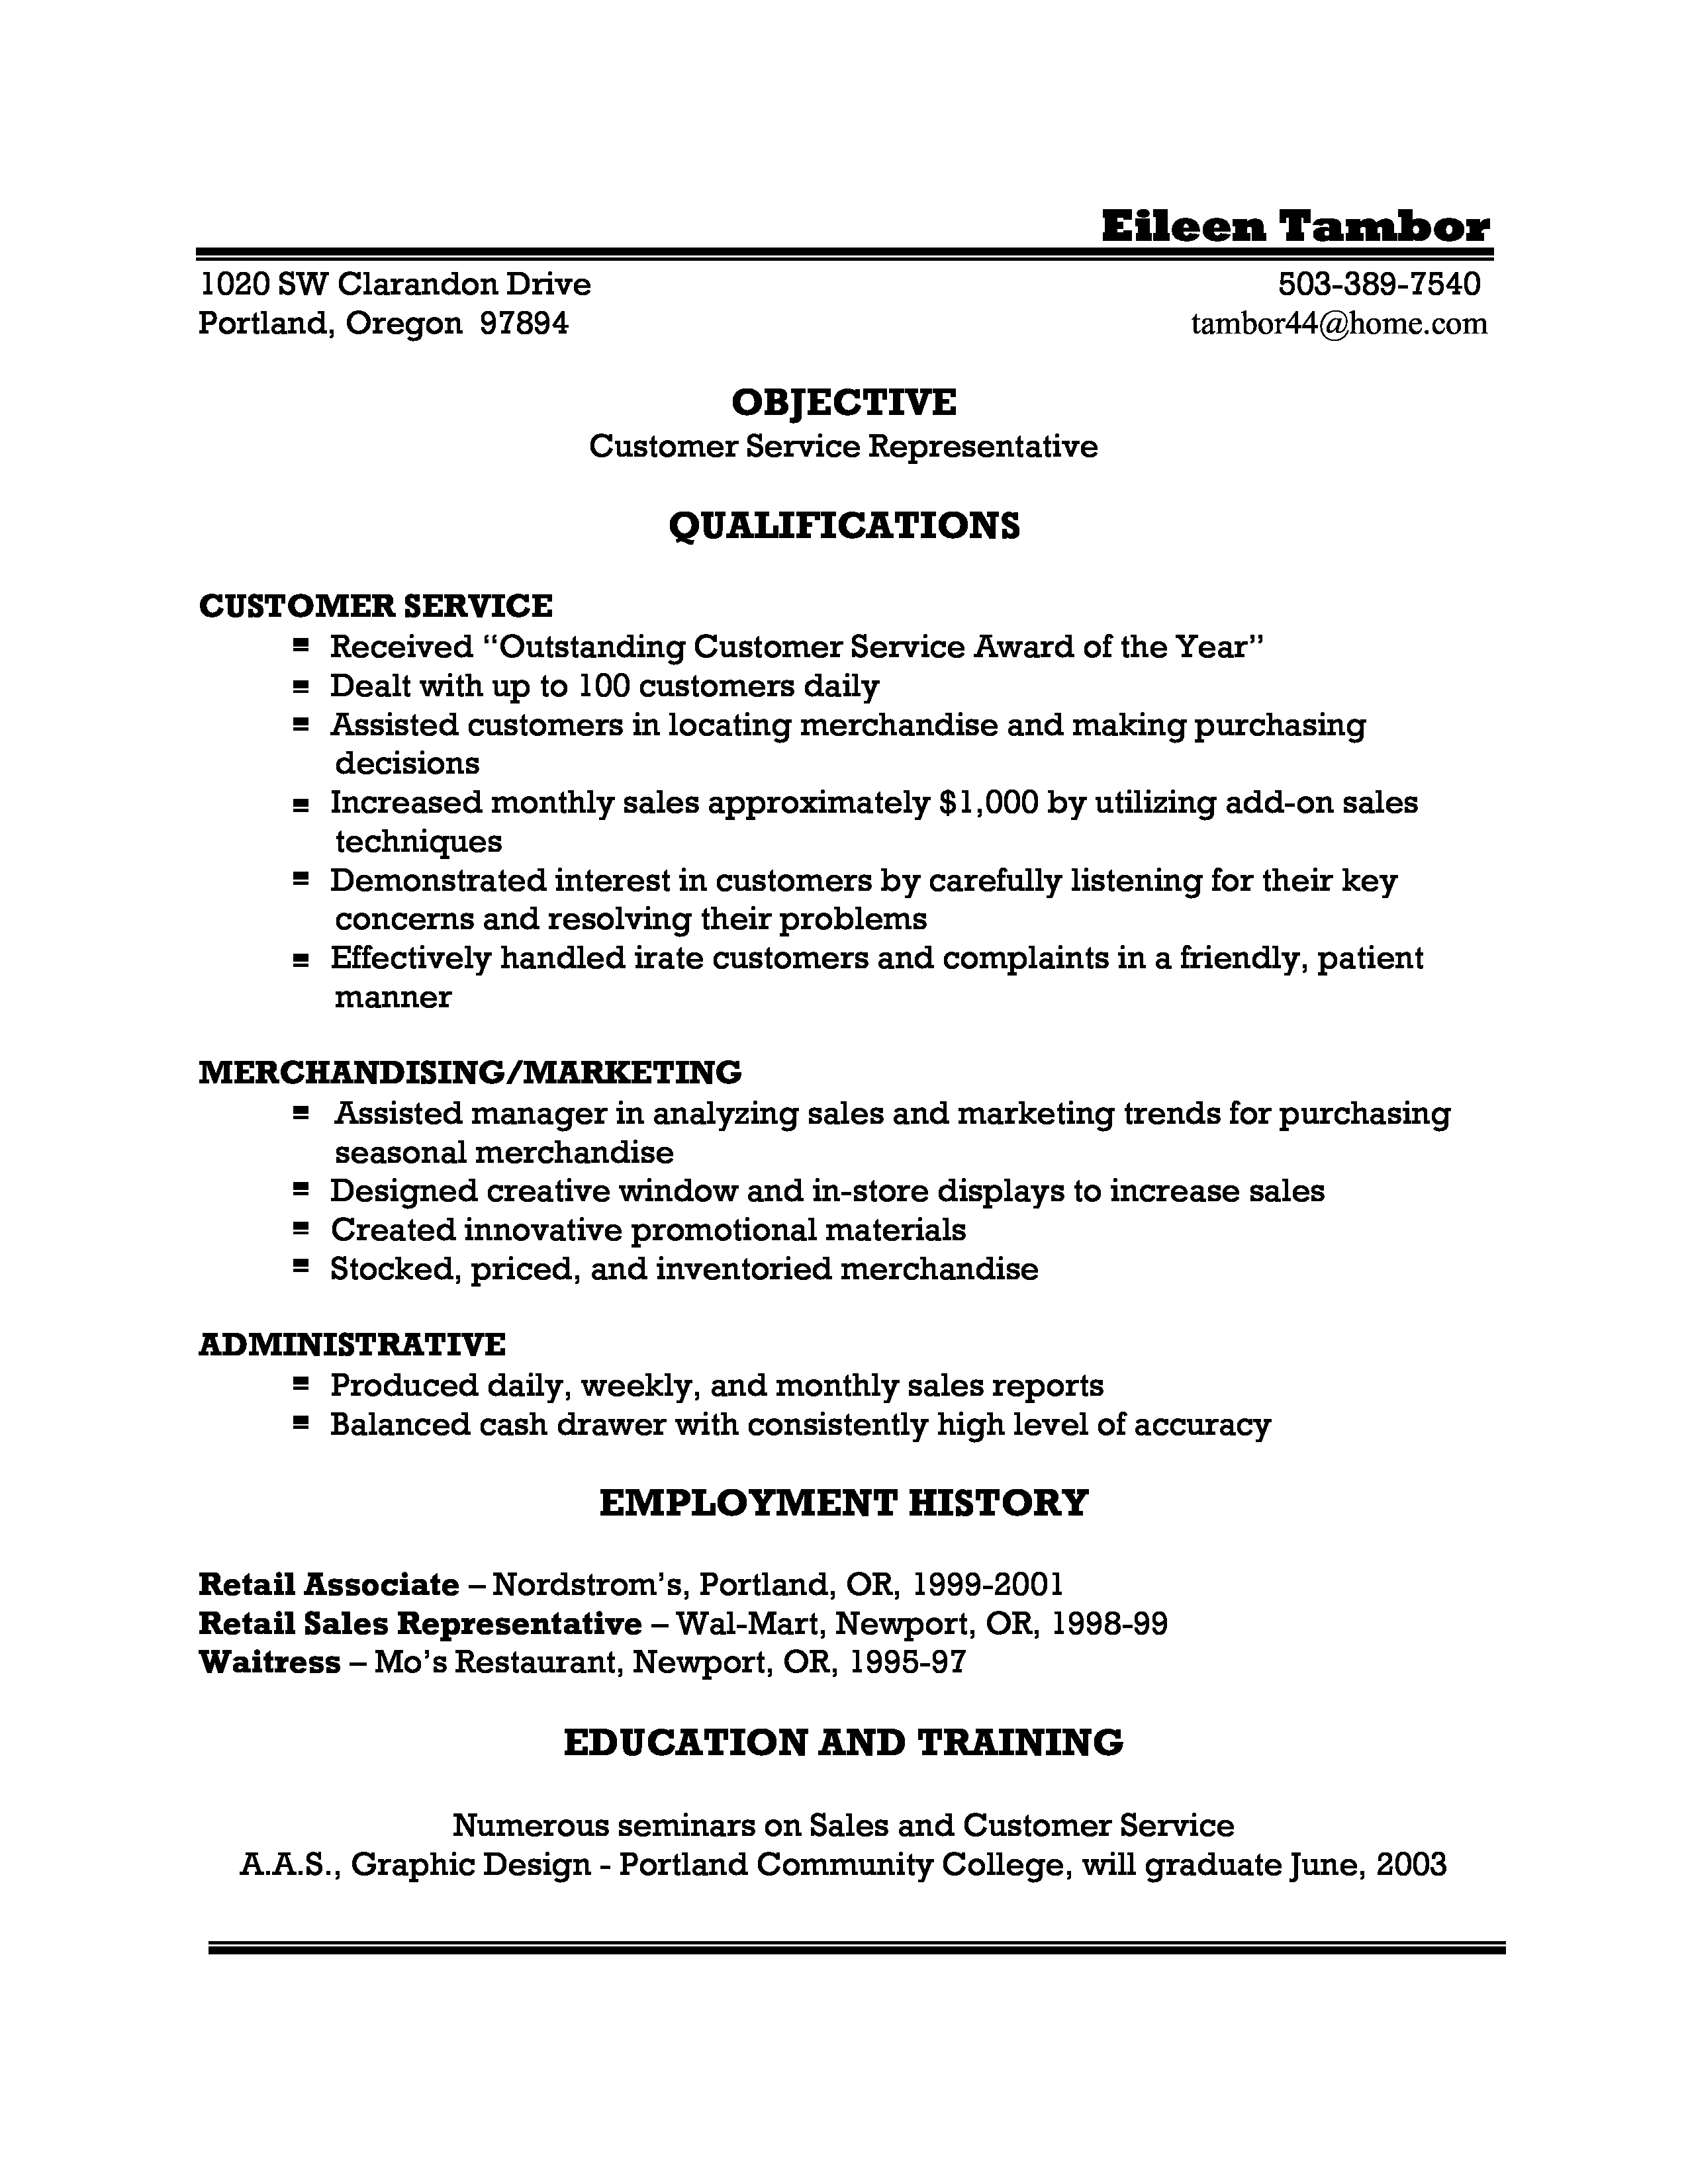 Resume Tips Objective Customer Service Resume Objective 20332 Westtexasrollerdollz